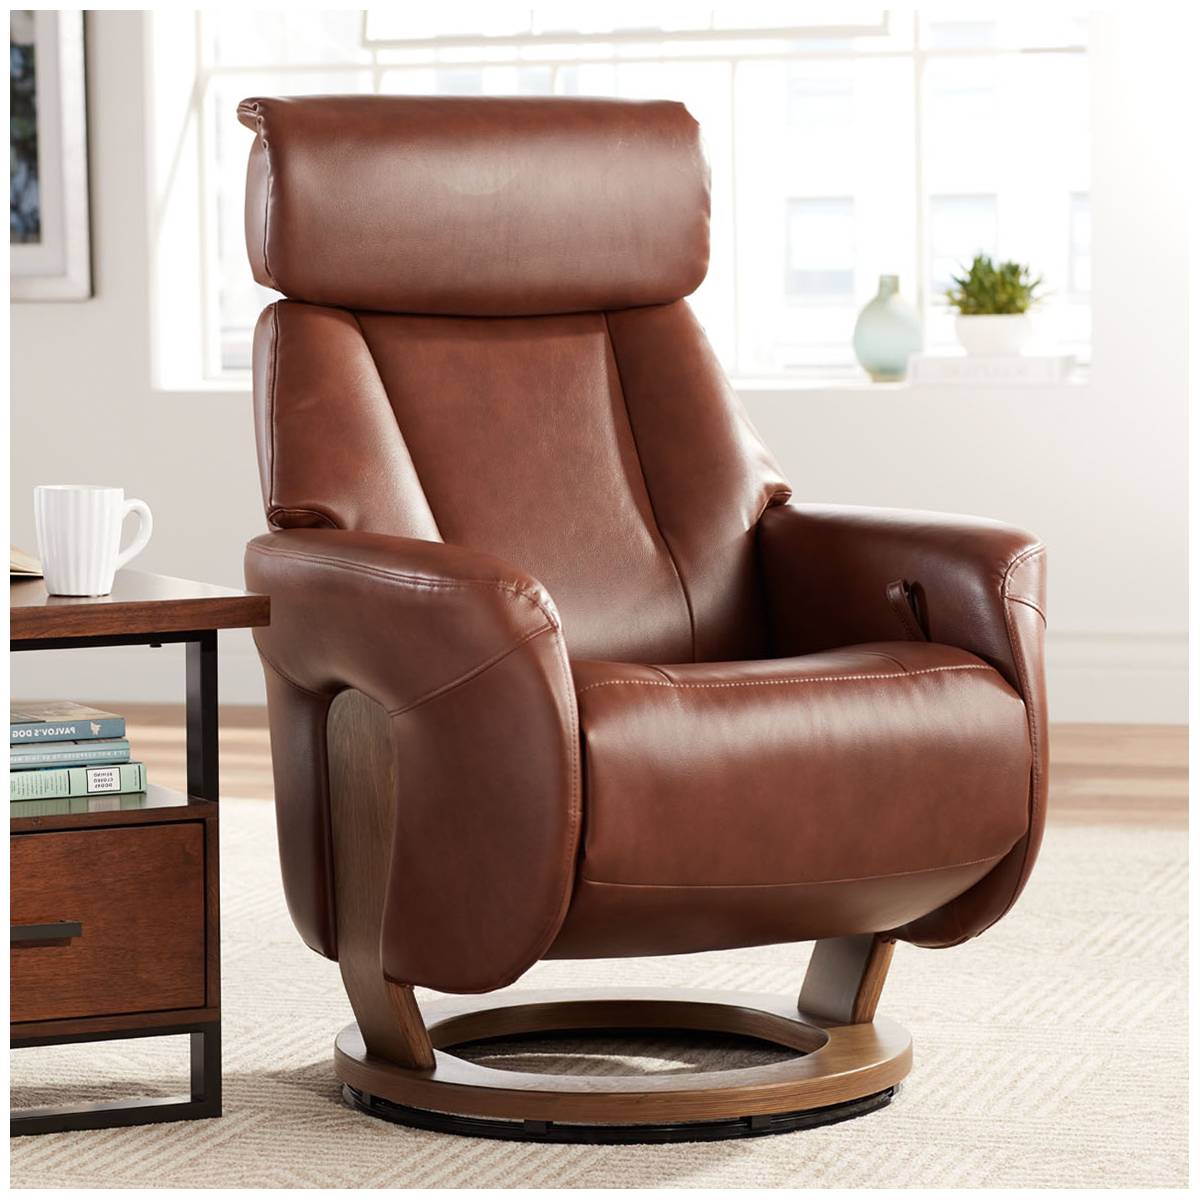 https://image.lampsplus.com/is/image/b9gt8/augusta-brown-faux-leather-4-way-modern-recliner-chair__64p65cropped.jpg?qlt=70&wid=1200&hei=1200&fmt=jpeg